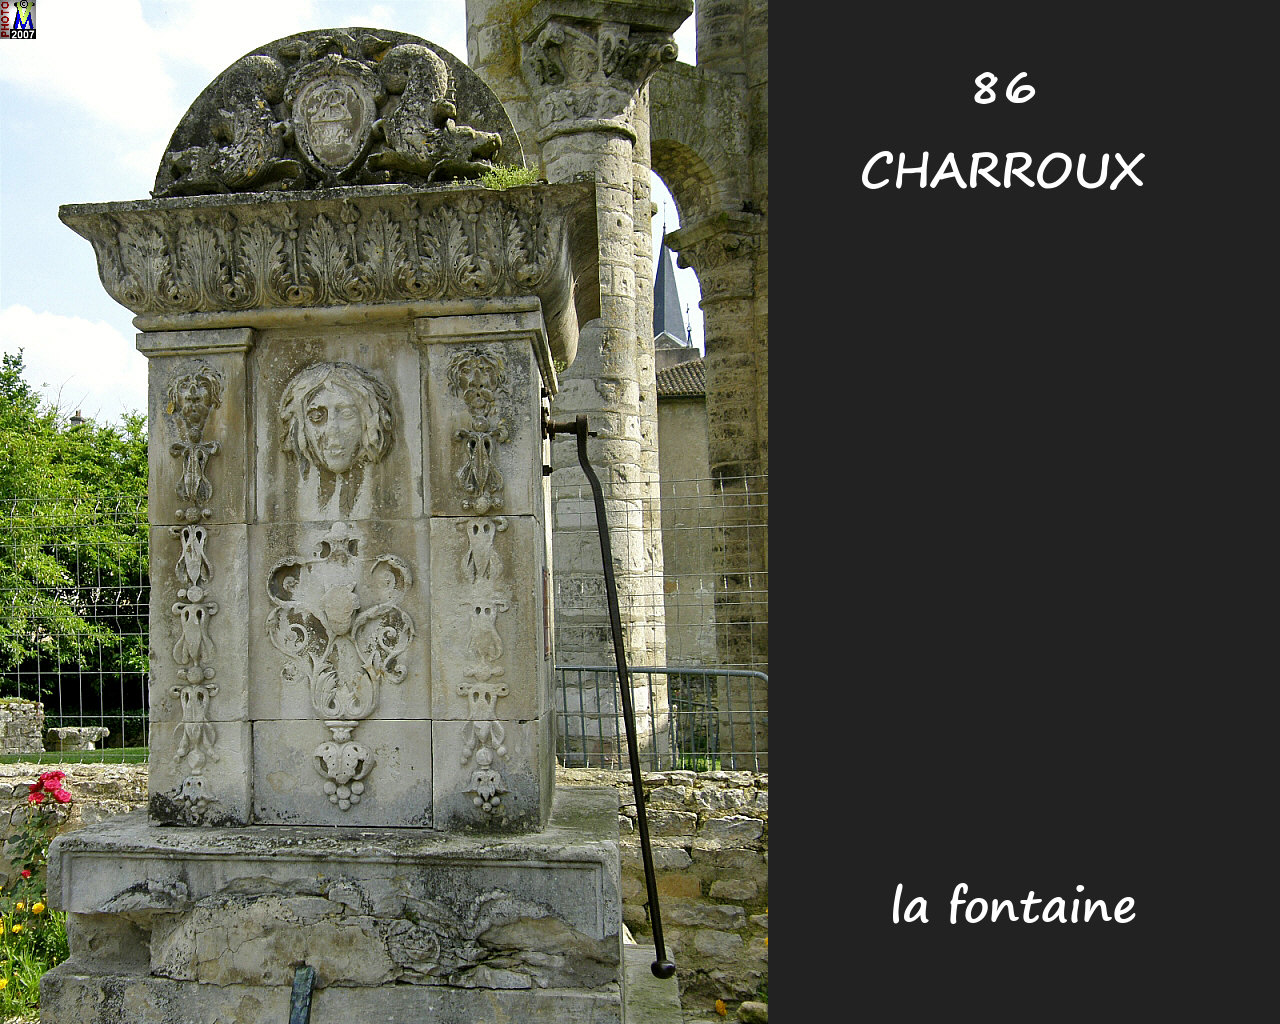 86CHARROUX_fontaine_100.jpg